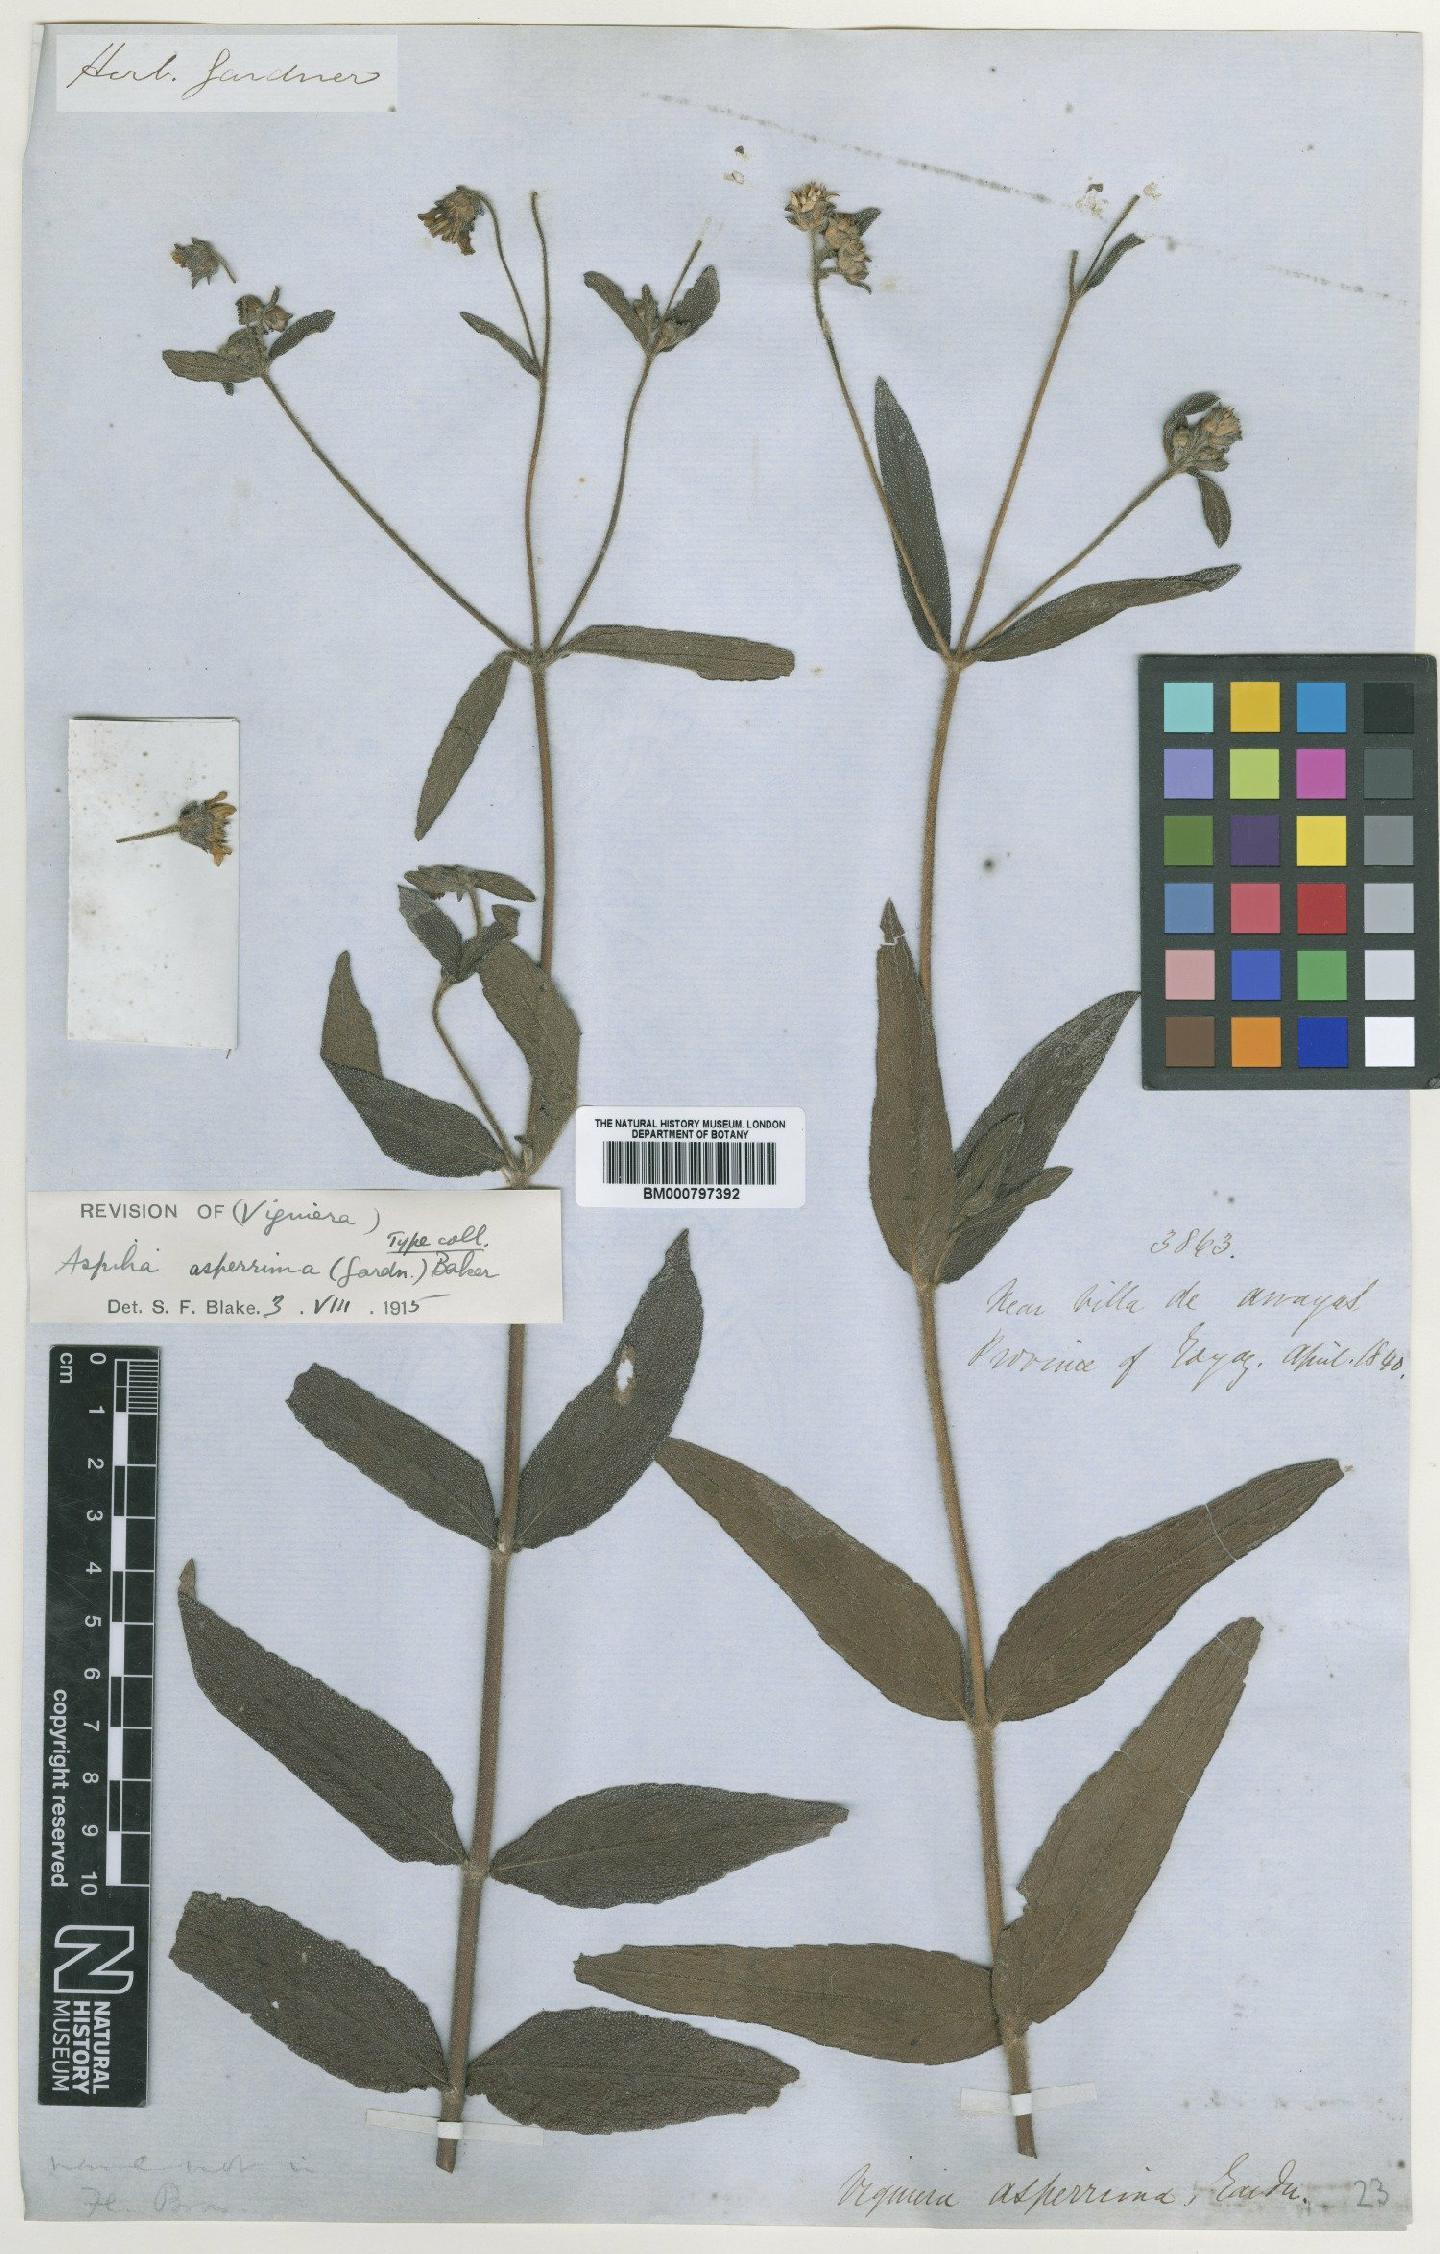 To NHMUK collection (Aspilia asperrima (Gardner) Baker; Type; NHMUK:ecatalogue:4990162)